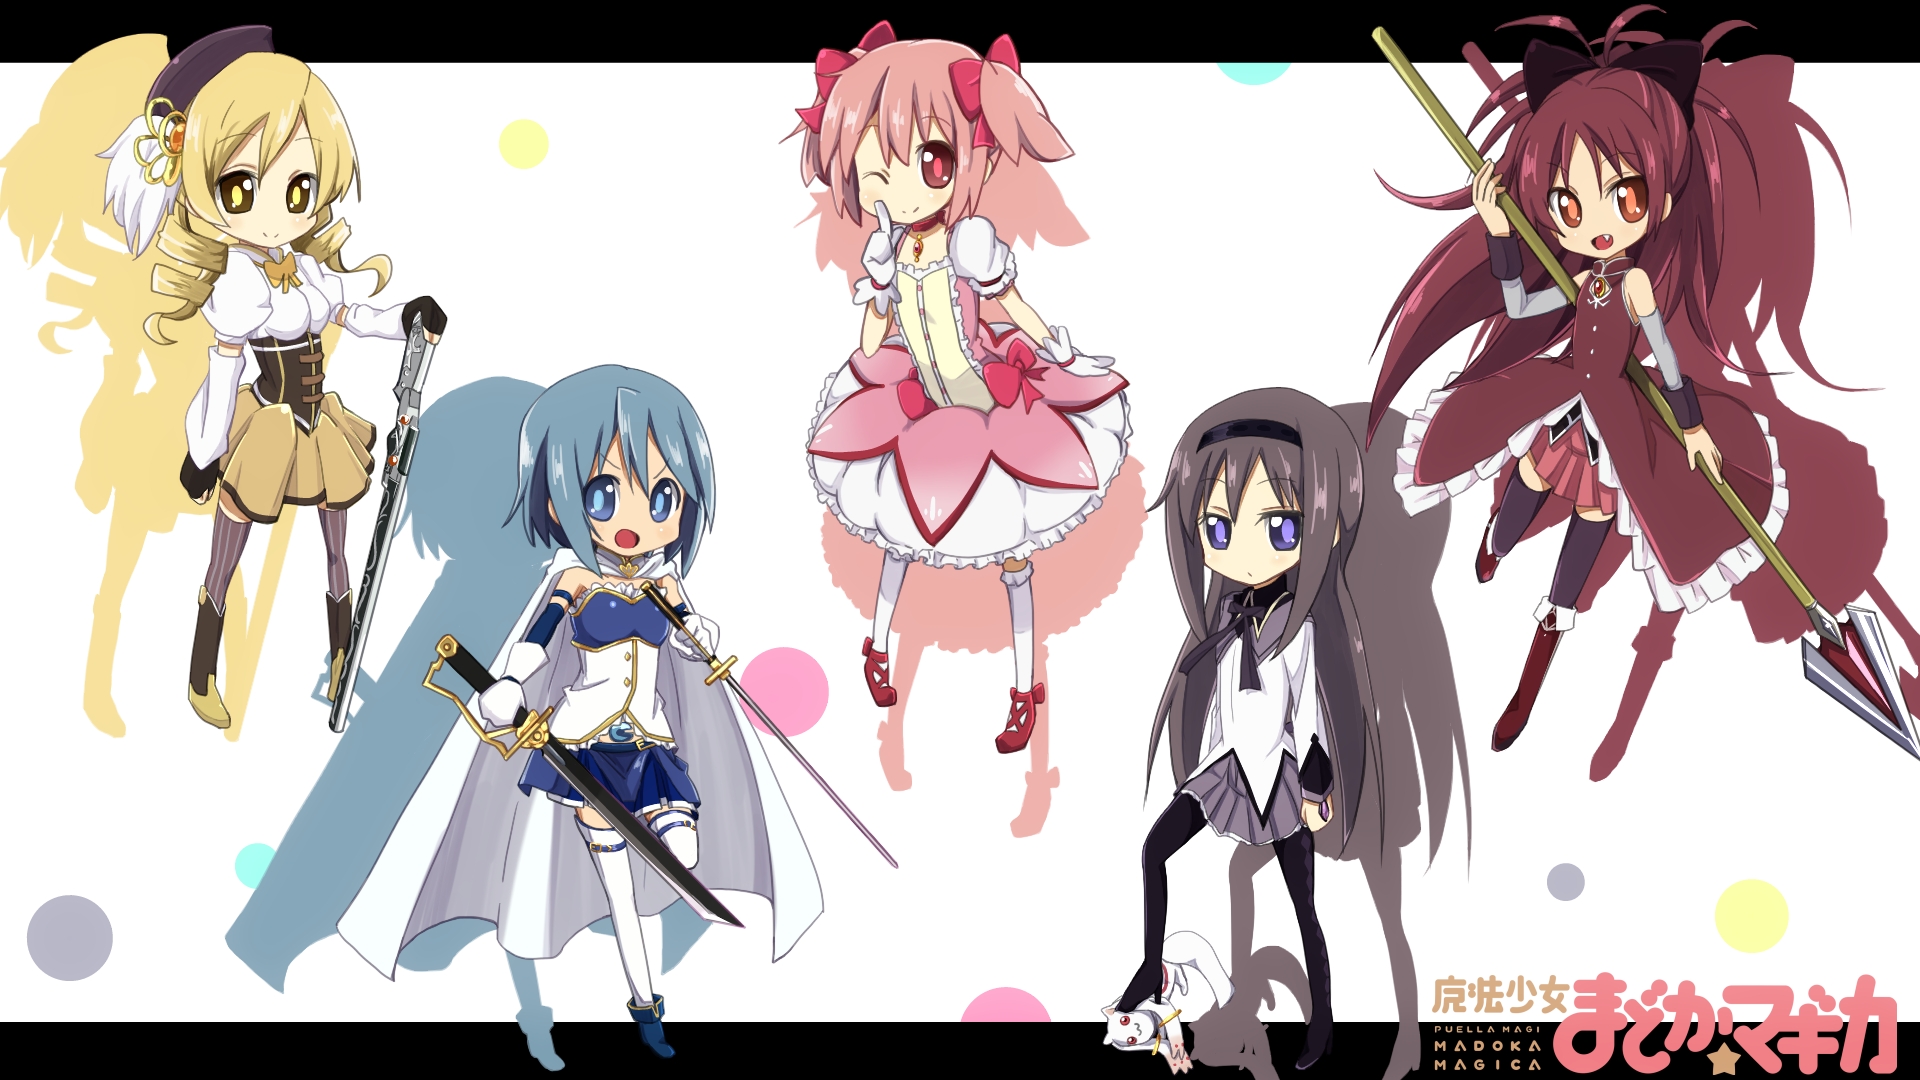 Téléchargez gratuitement l'image Kyōko Sakura, Madoka Kaname, Maman Tomoe, Sayaka Miki, Puella Magi Madoka Magica, Homura Akemi, Animé sur le bureau de votre PC